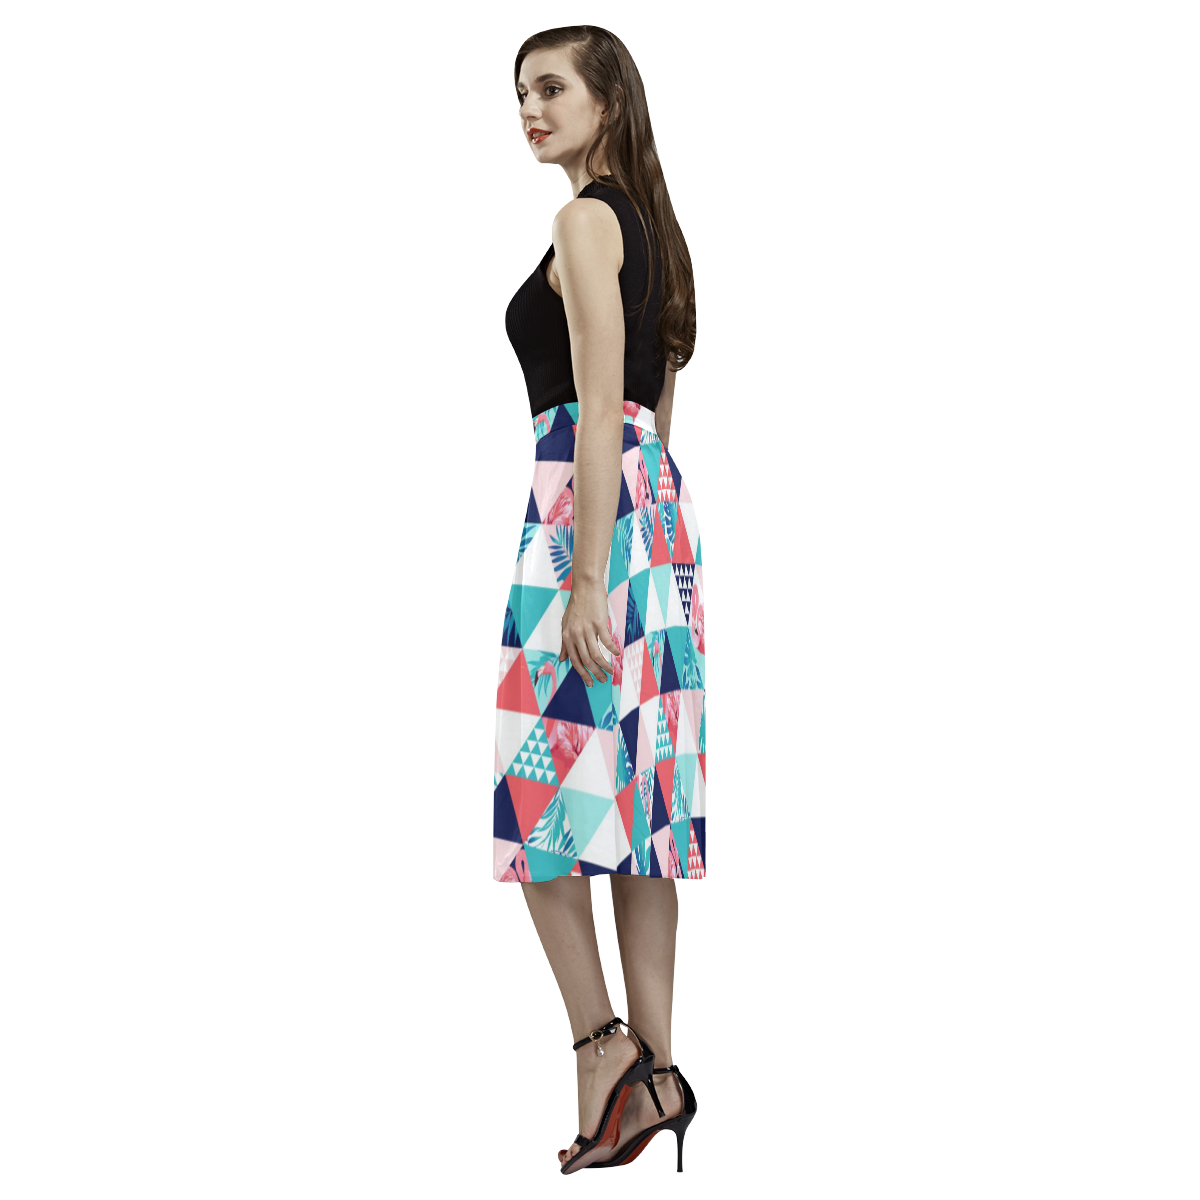 Flamingo Triangle Pattern Aoede Crepe Skirt (Model D16)